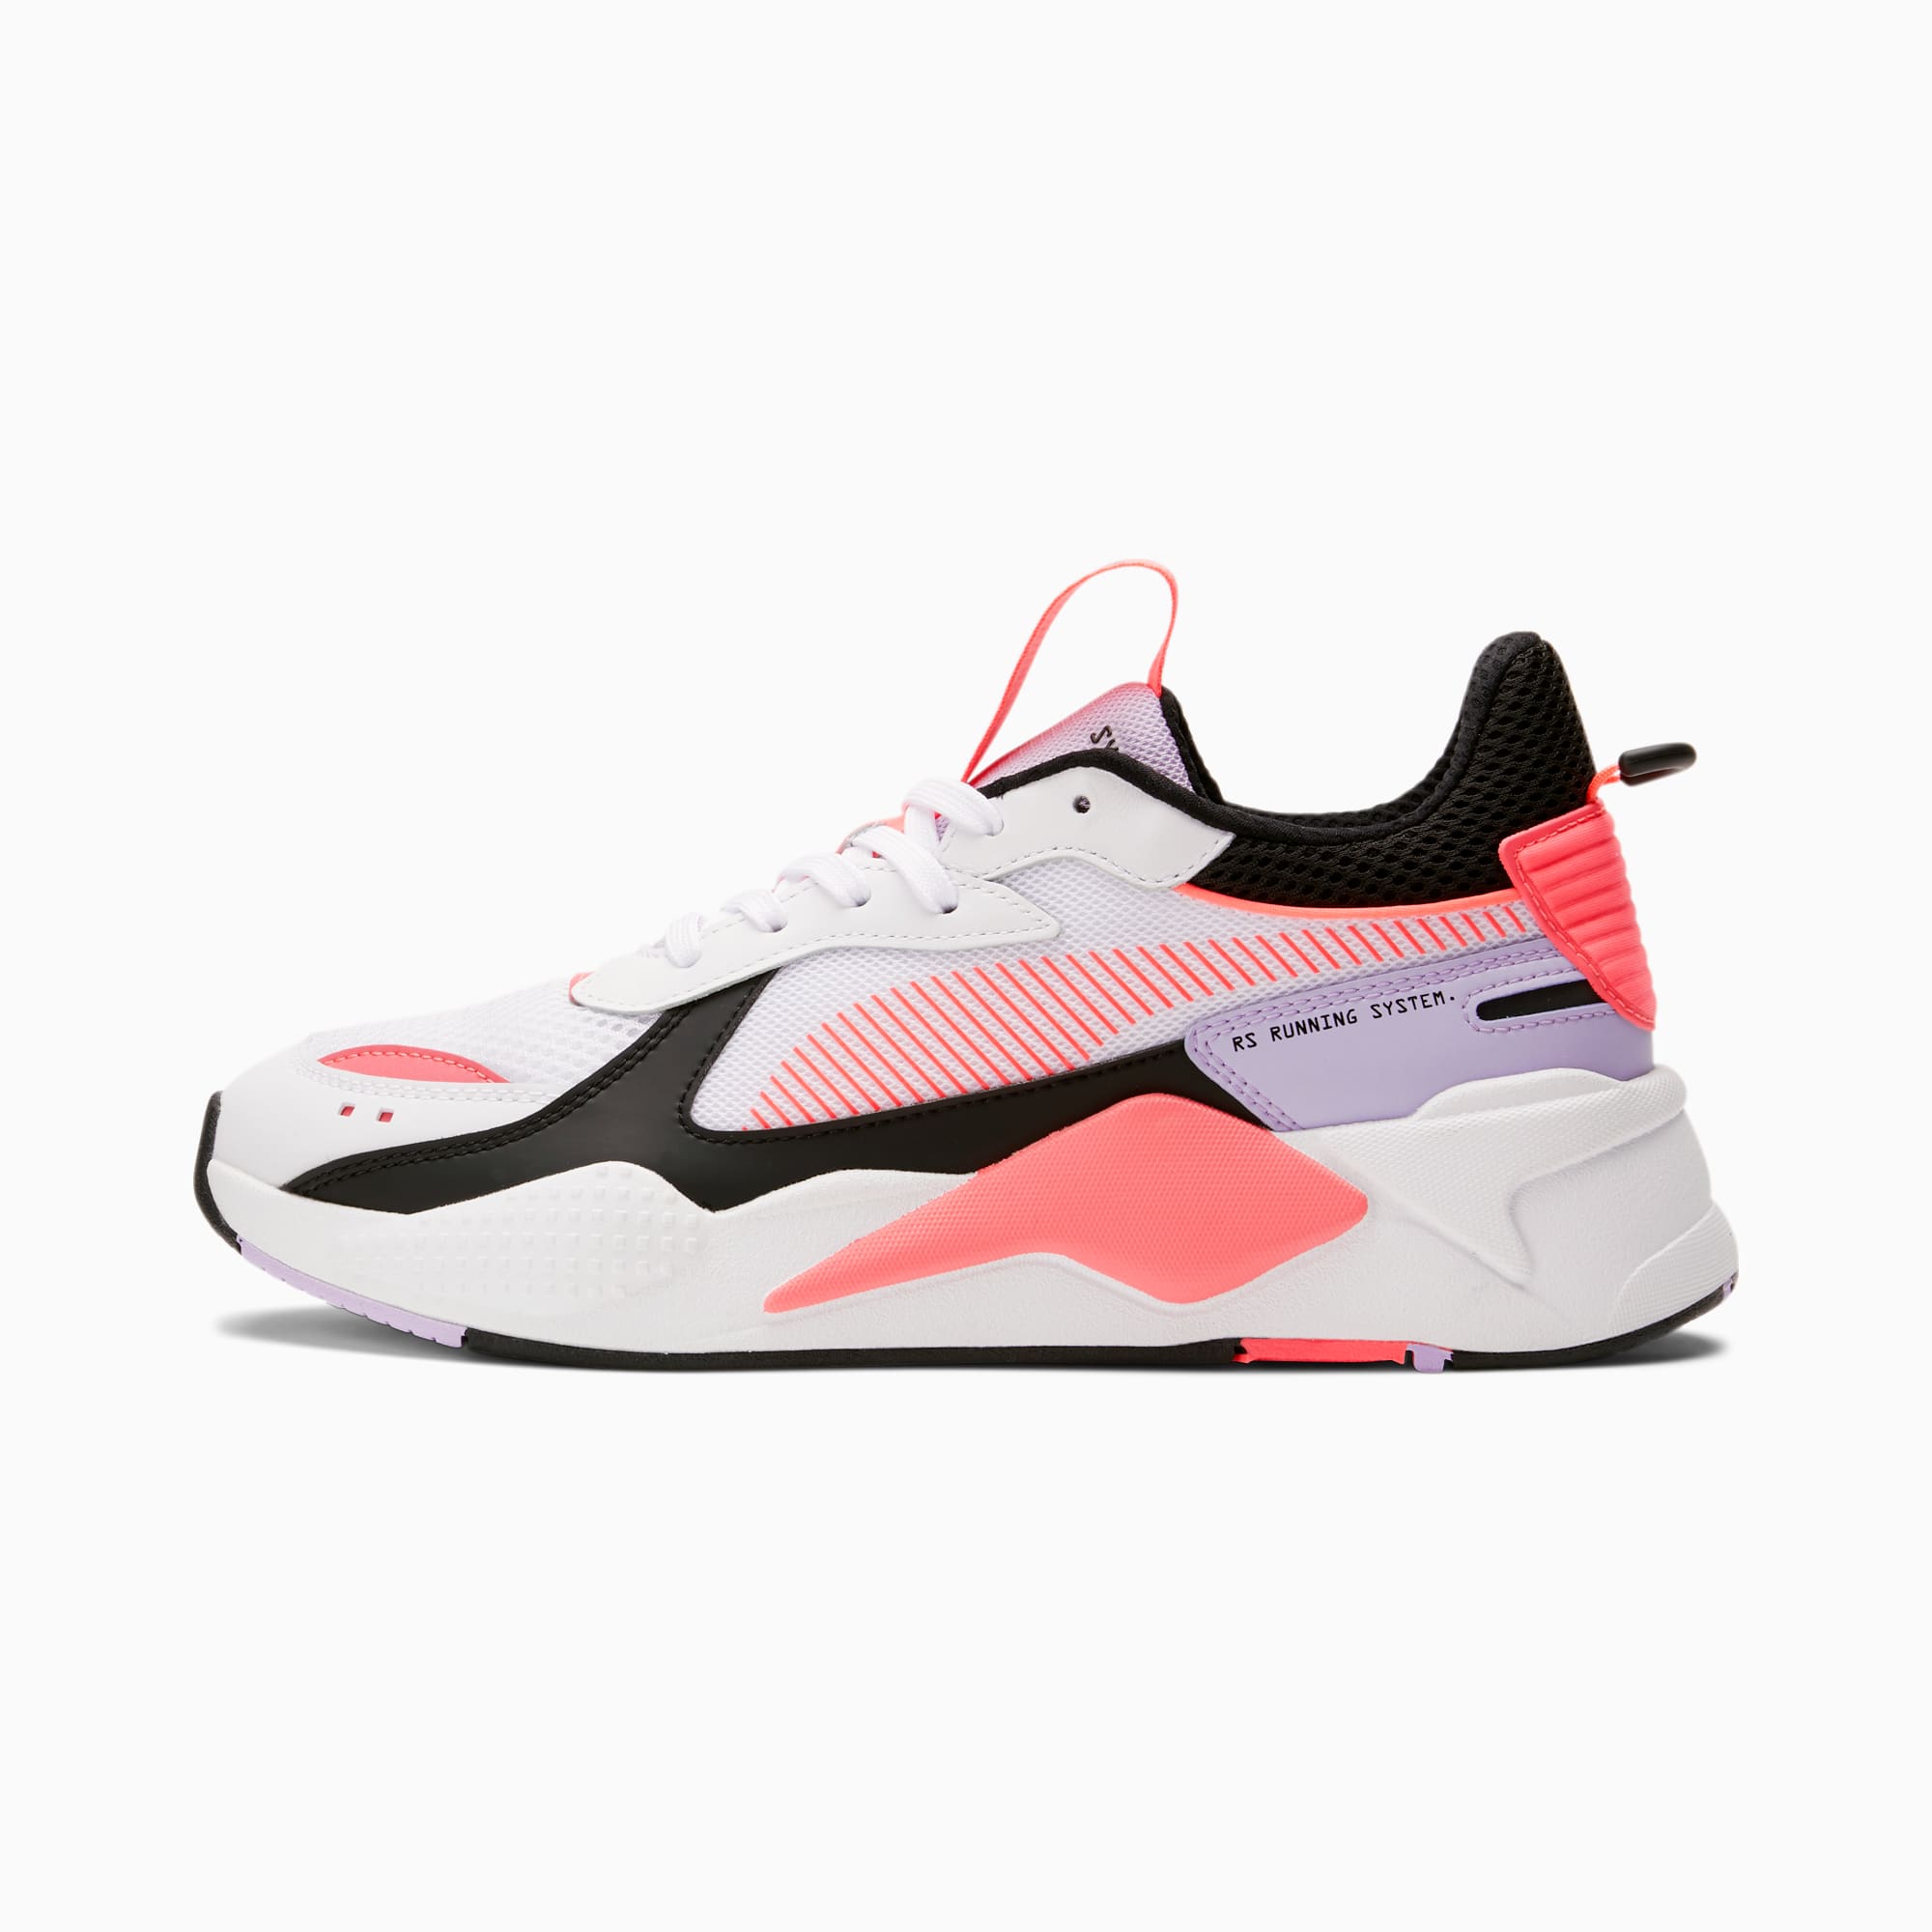 1990s puma sneakers